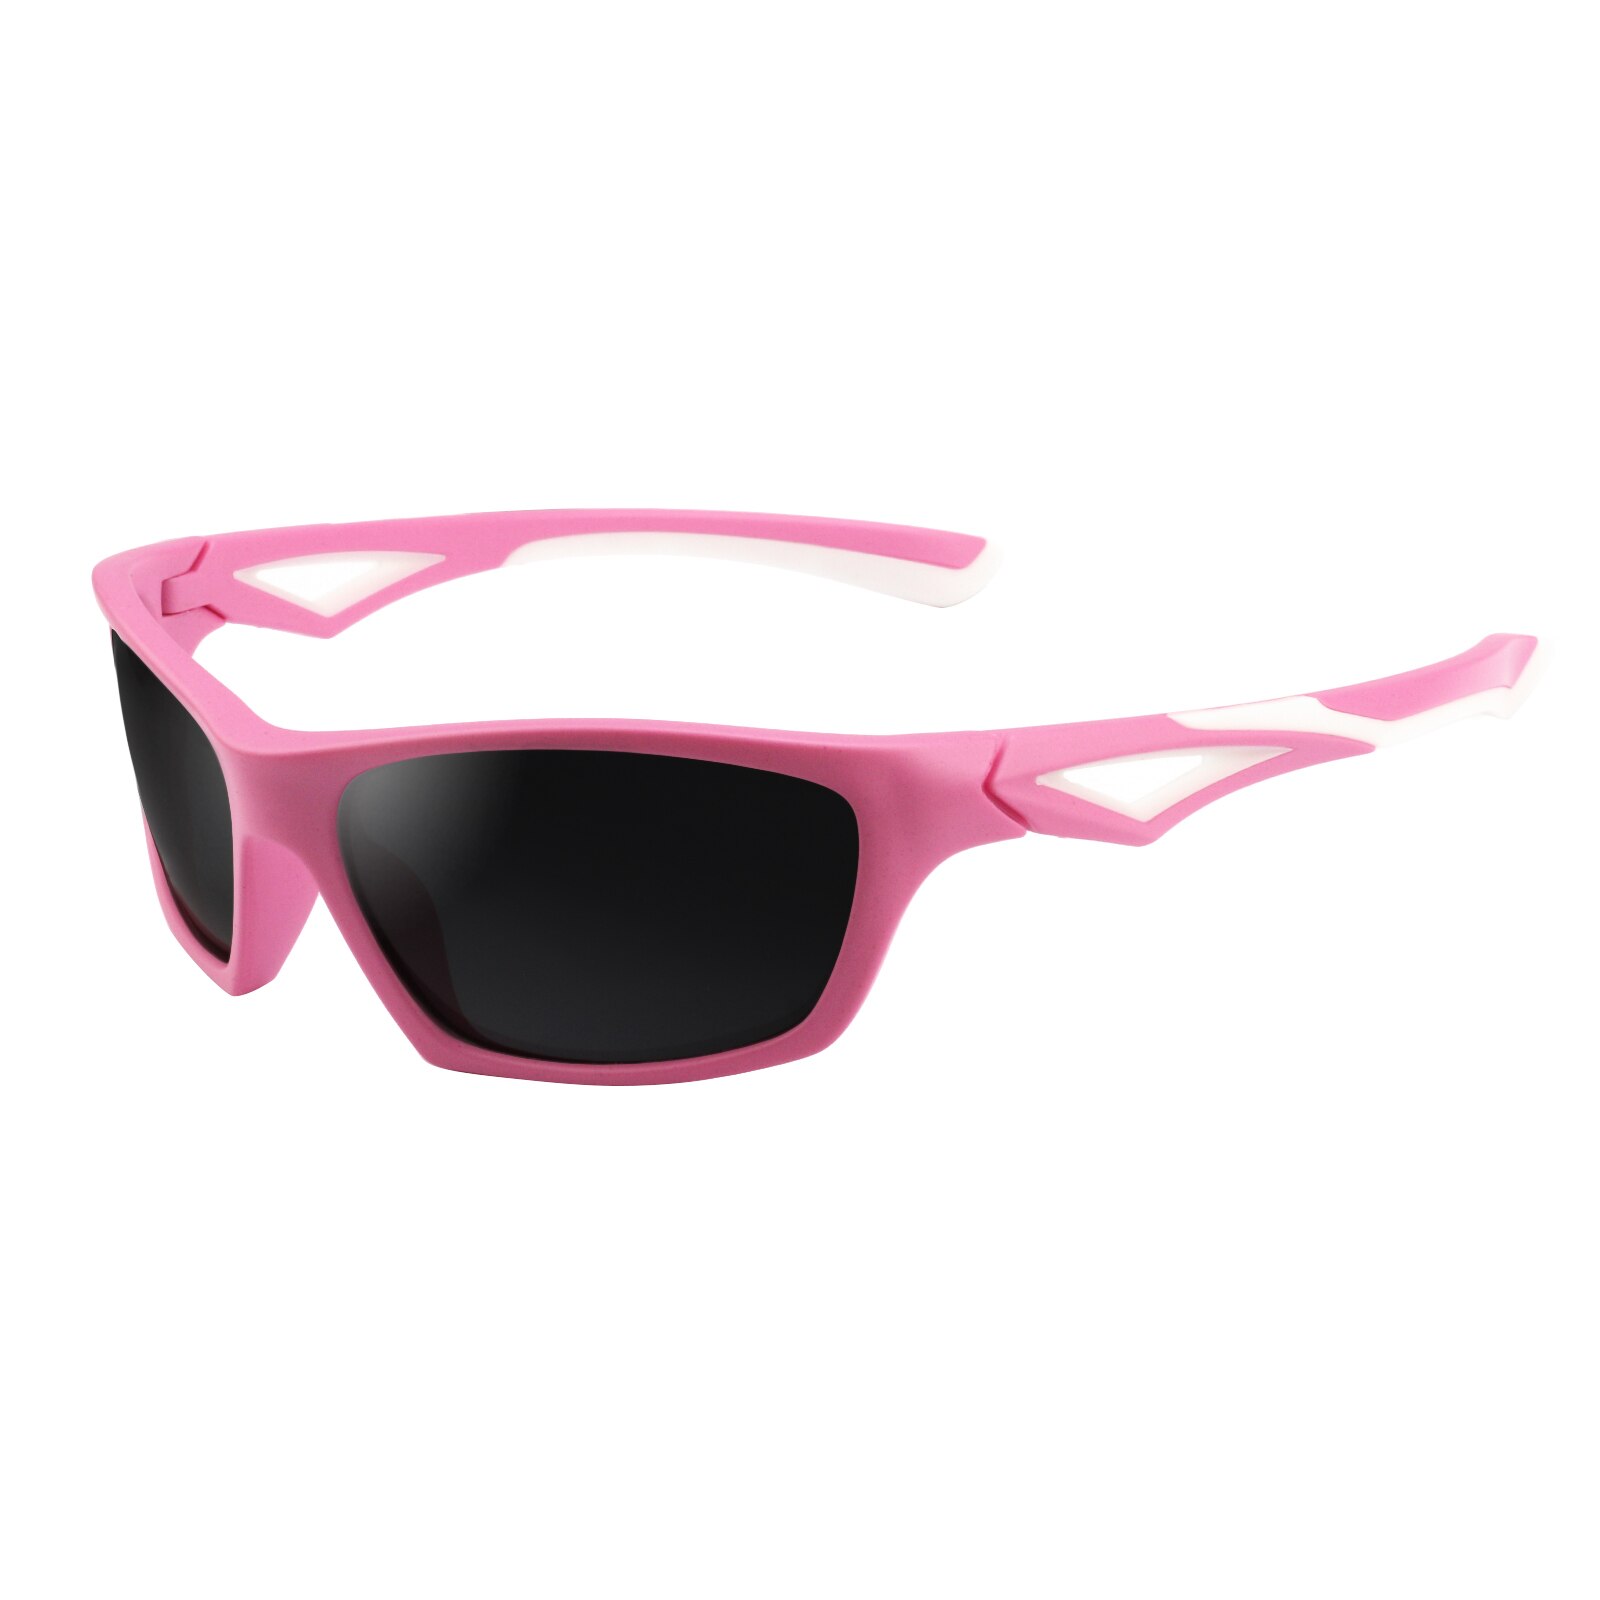 Kids Polarized Sunglasses TR90 Unbreakable Flexible Sport Glasses UV Protection for Boys Girls Age 3-10 Child Eyewear UV400: PInk White l Black